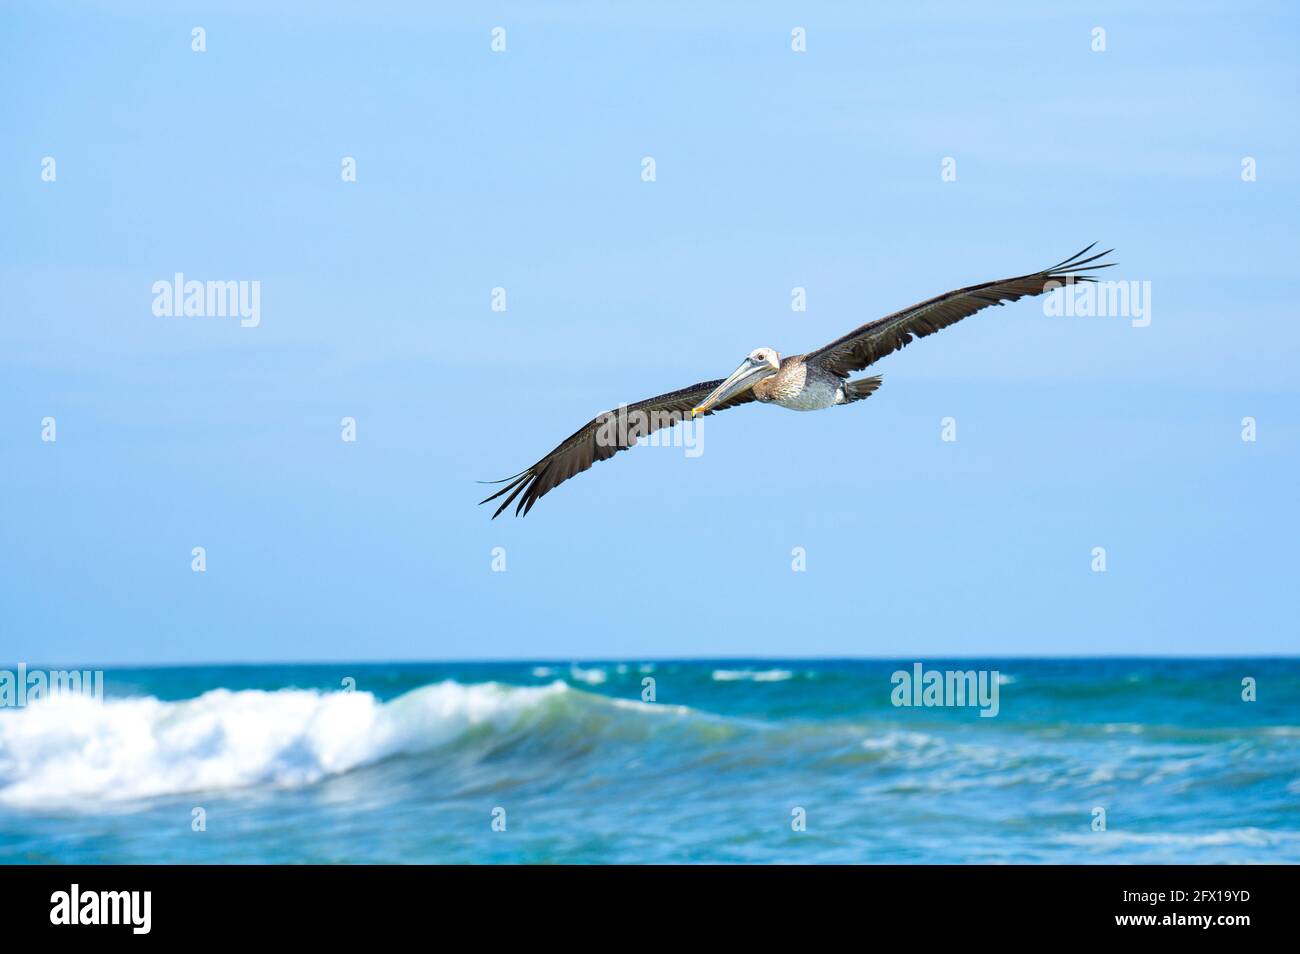 Pélican brun (pelecanus occidentalis) volant au-dessus de l'océan dans la province de Puntarenas, au Costa Rica Banque D'Images